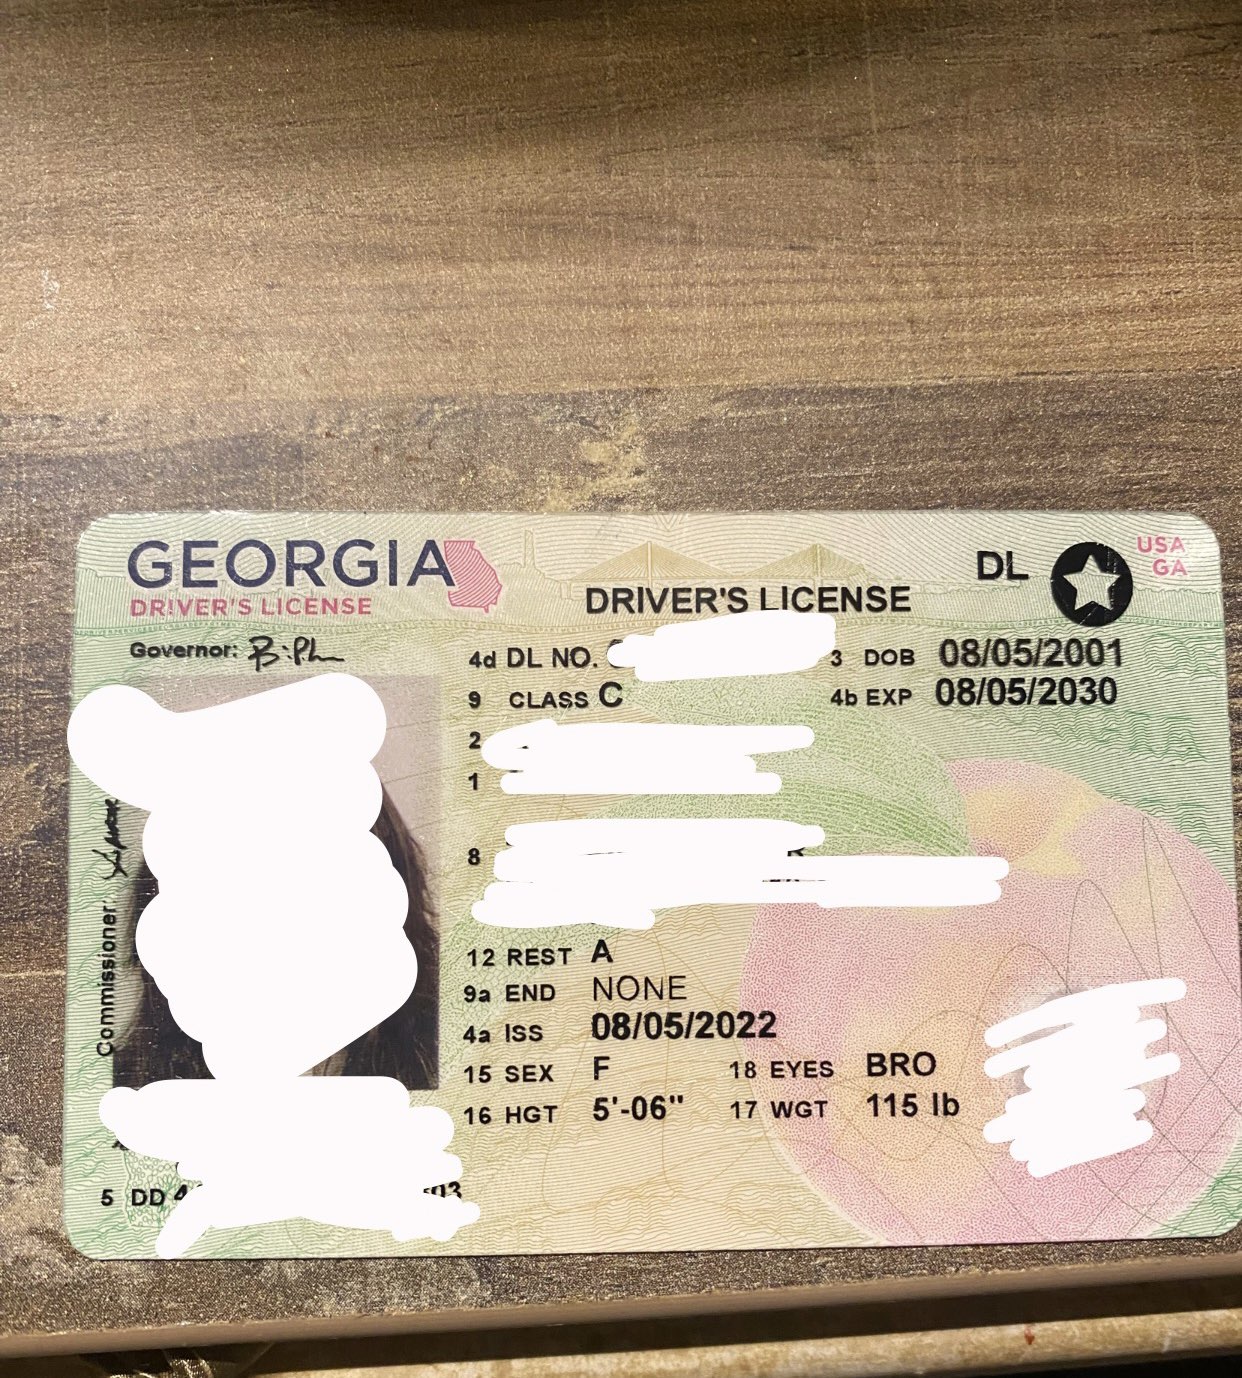 Georgia Fake Id Maker